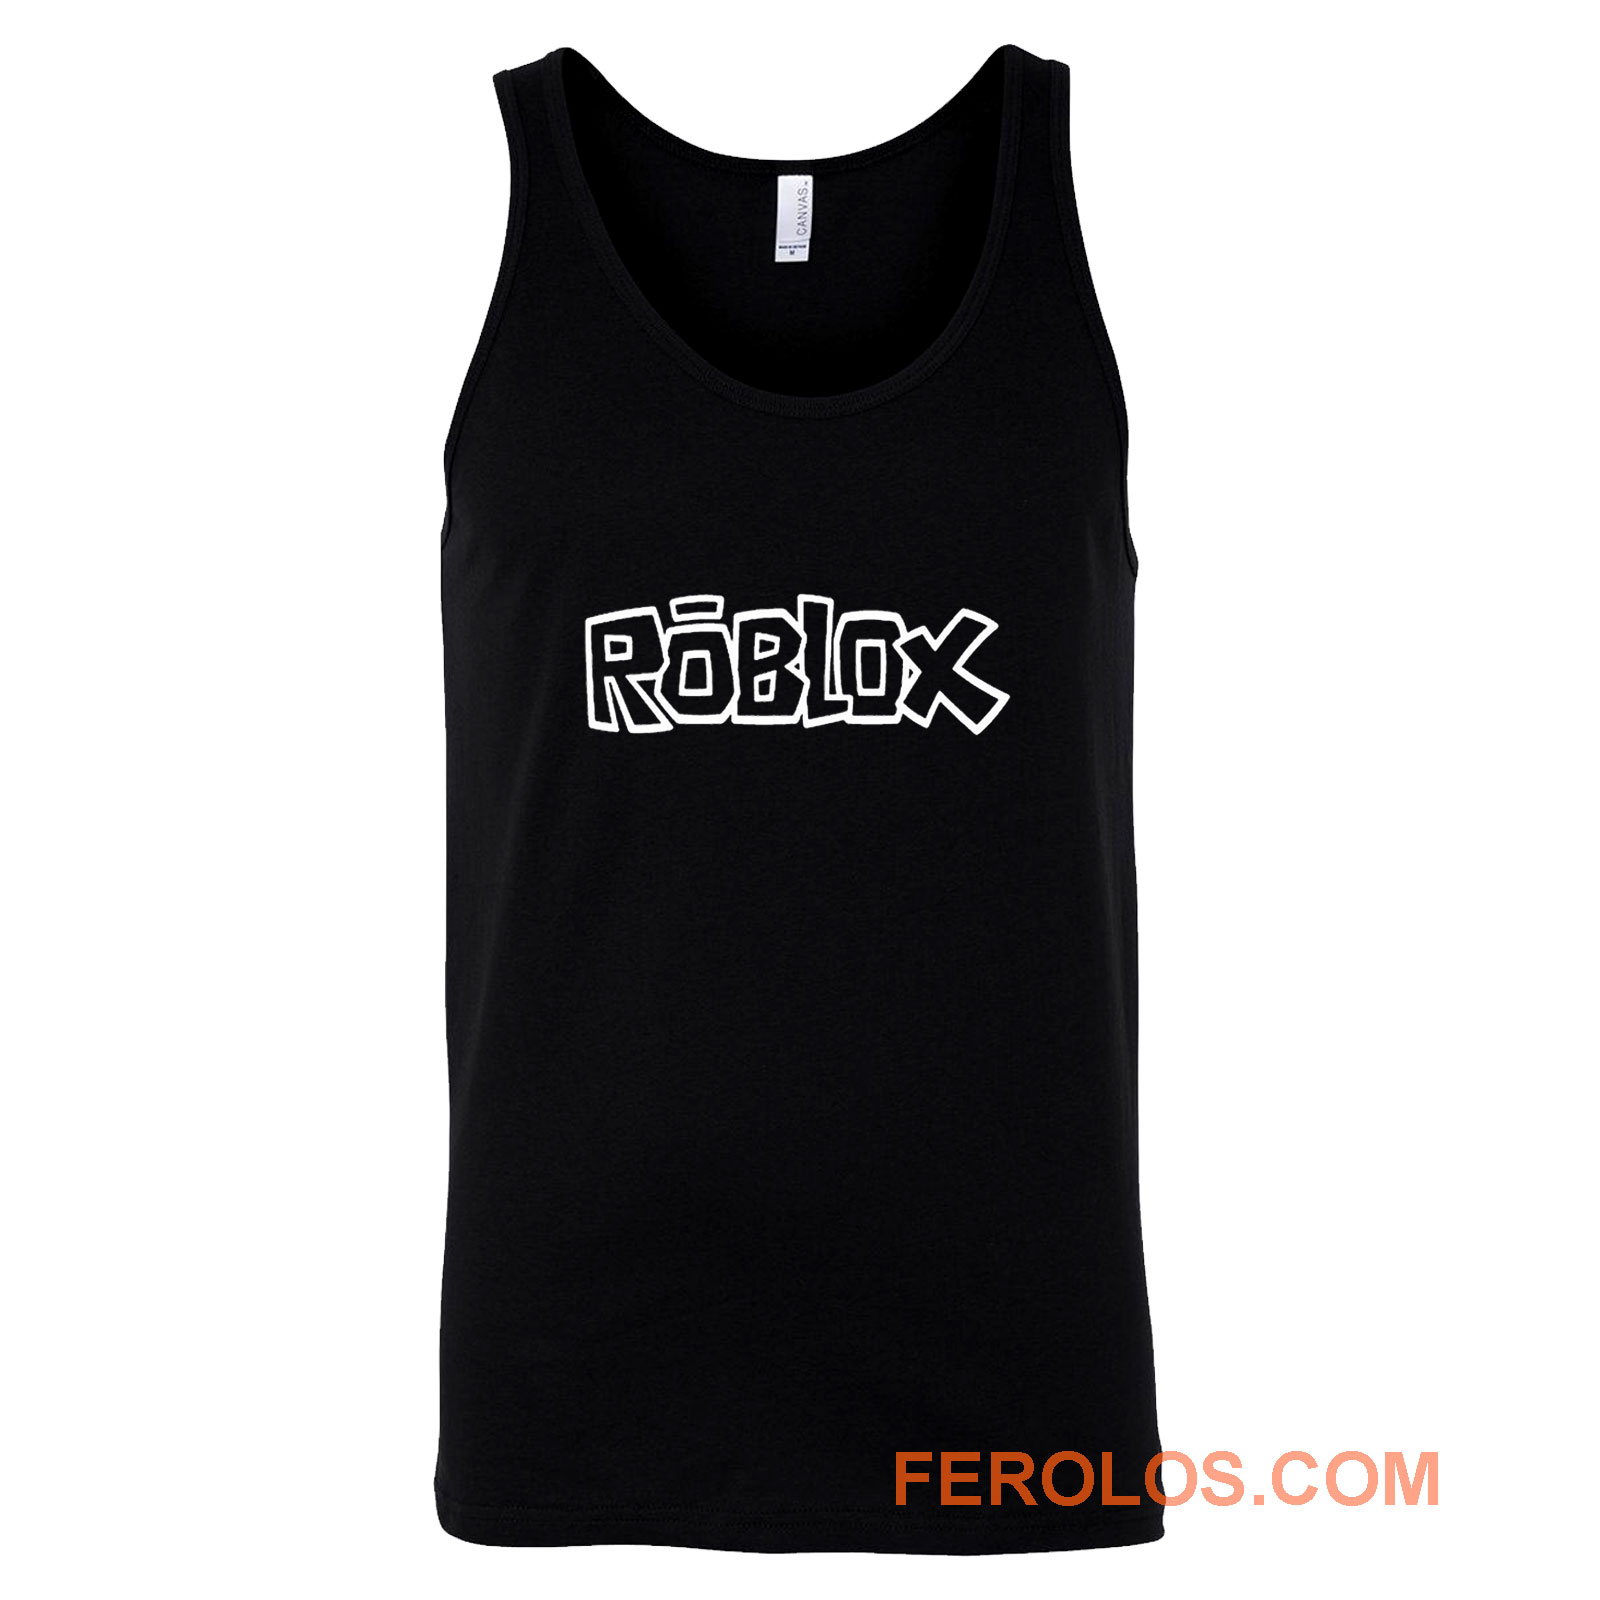 roblox-tank-top-men-women-ferolos-com